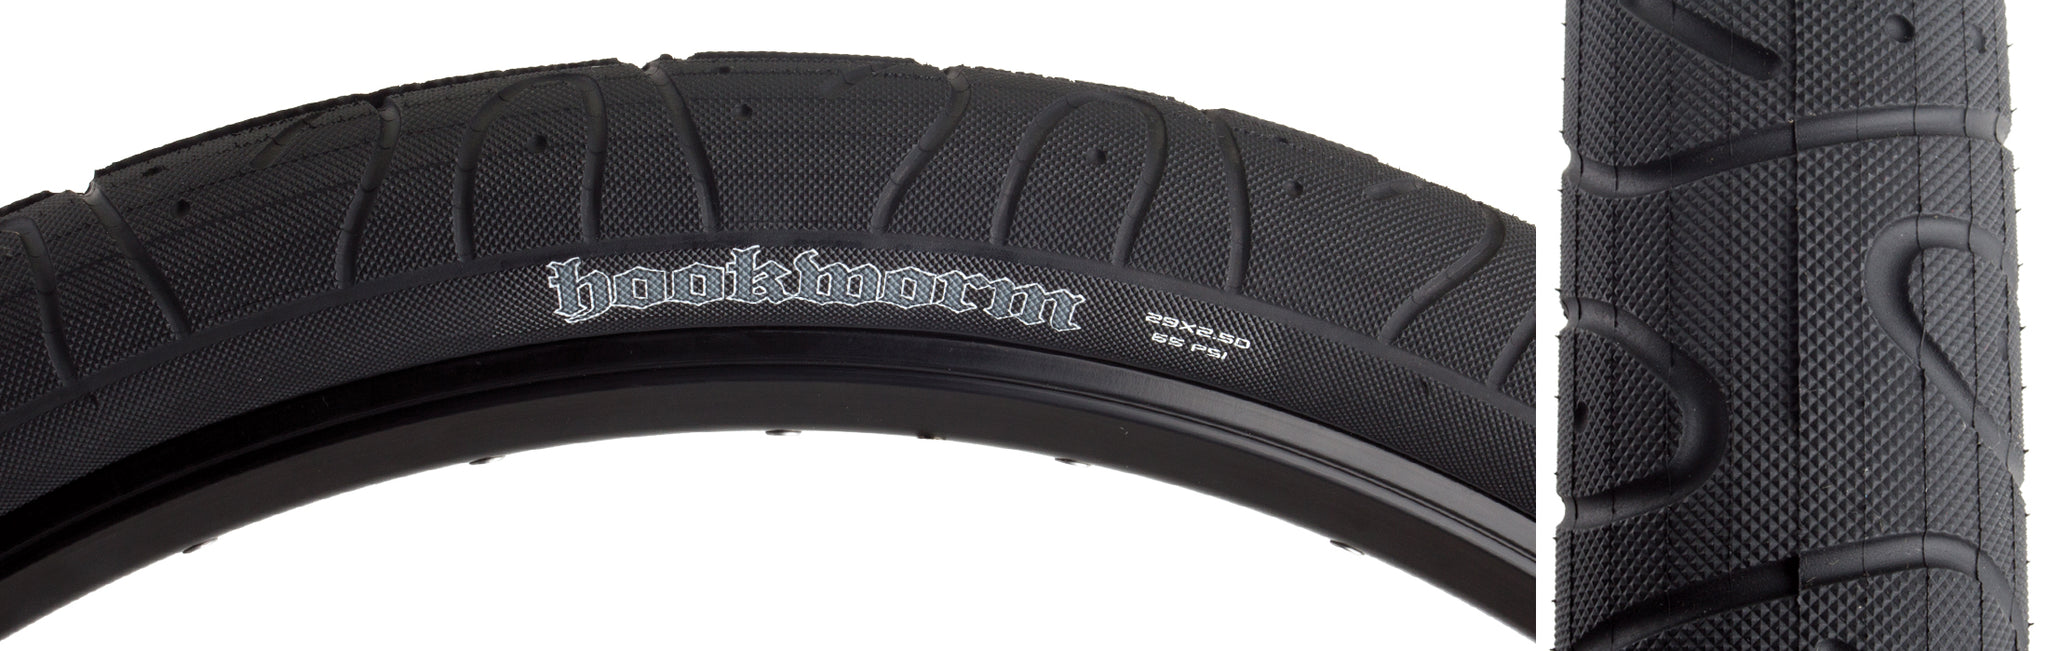 Maxxis Hookworm Tyre - 29 x 2.5 - SUPER SALE